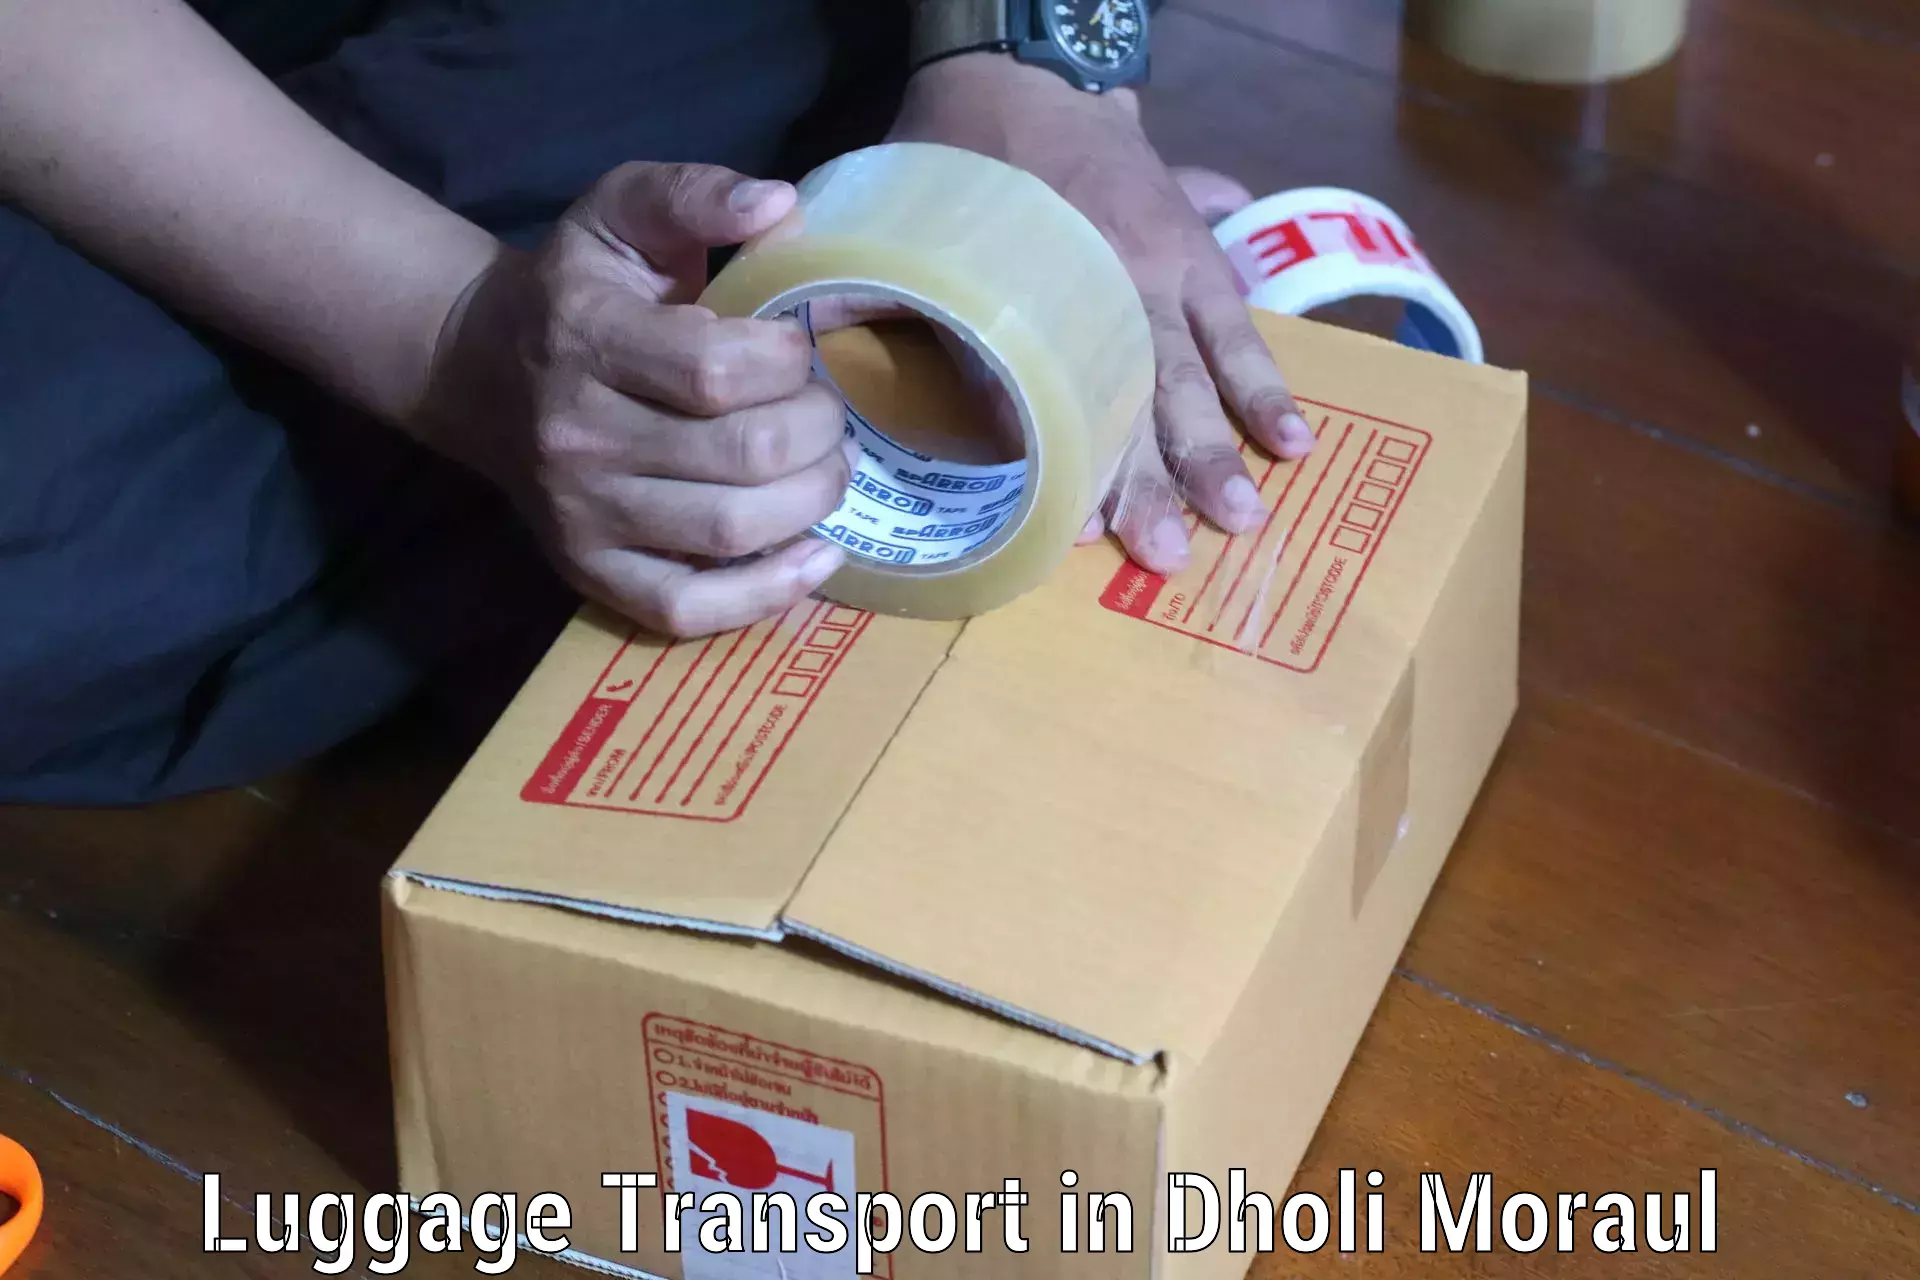 Luggage delivery estimate in Dholi Moraul